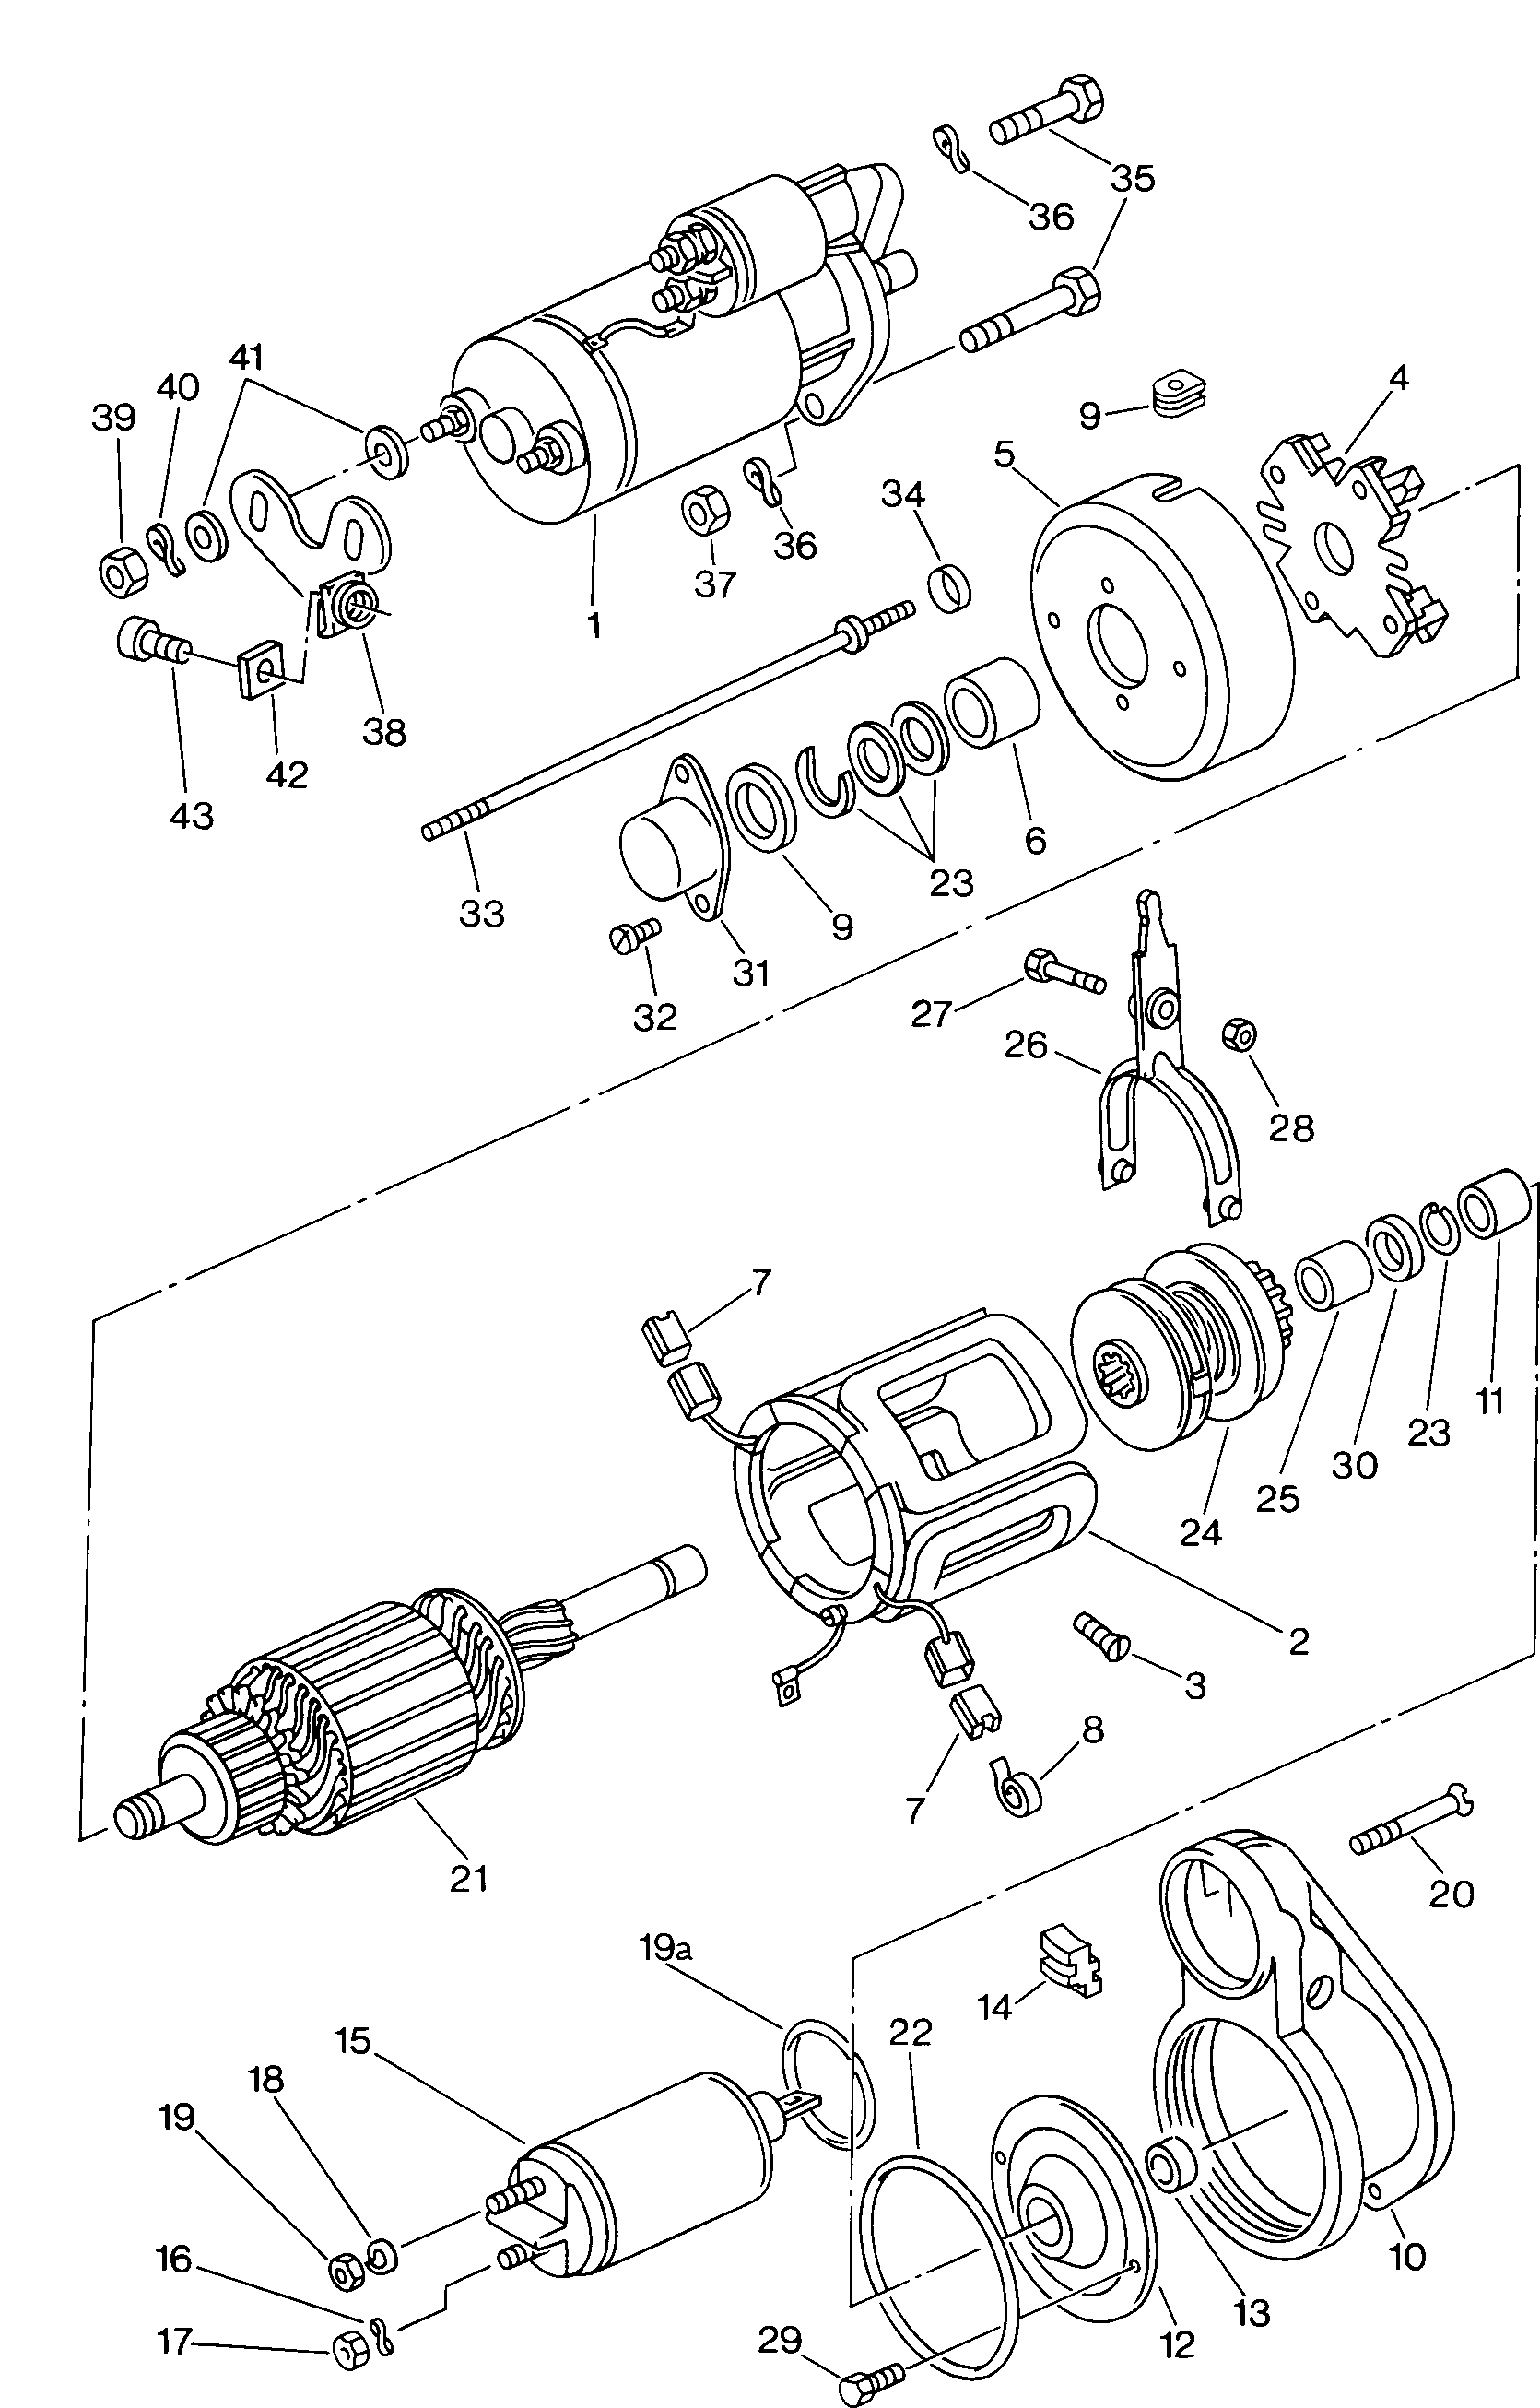 Marş motoru ve Yekpare parça 24V - Mod.181 / Iltis - ilt